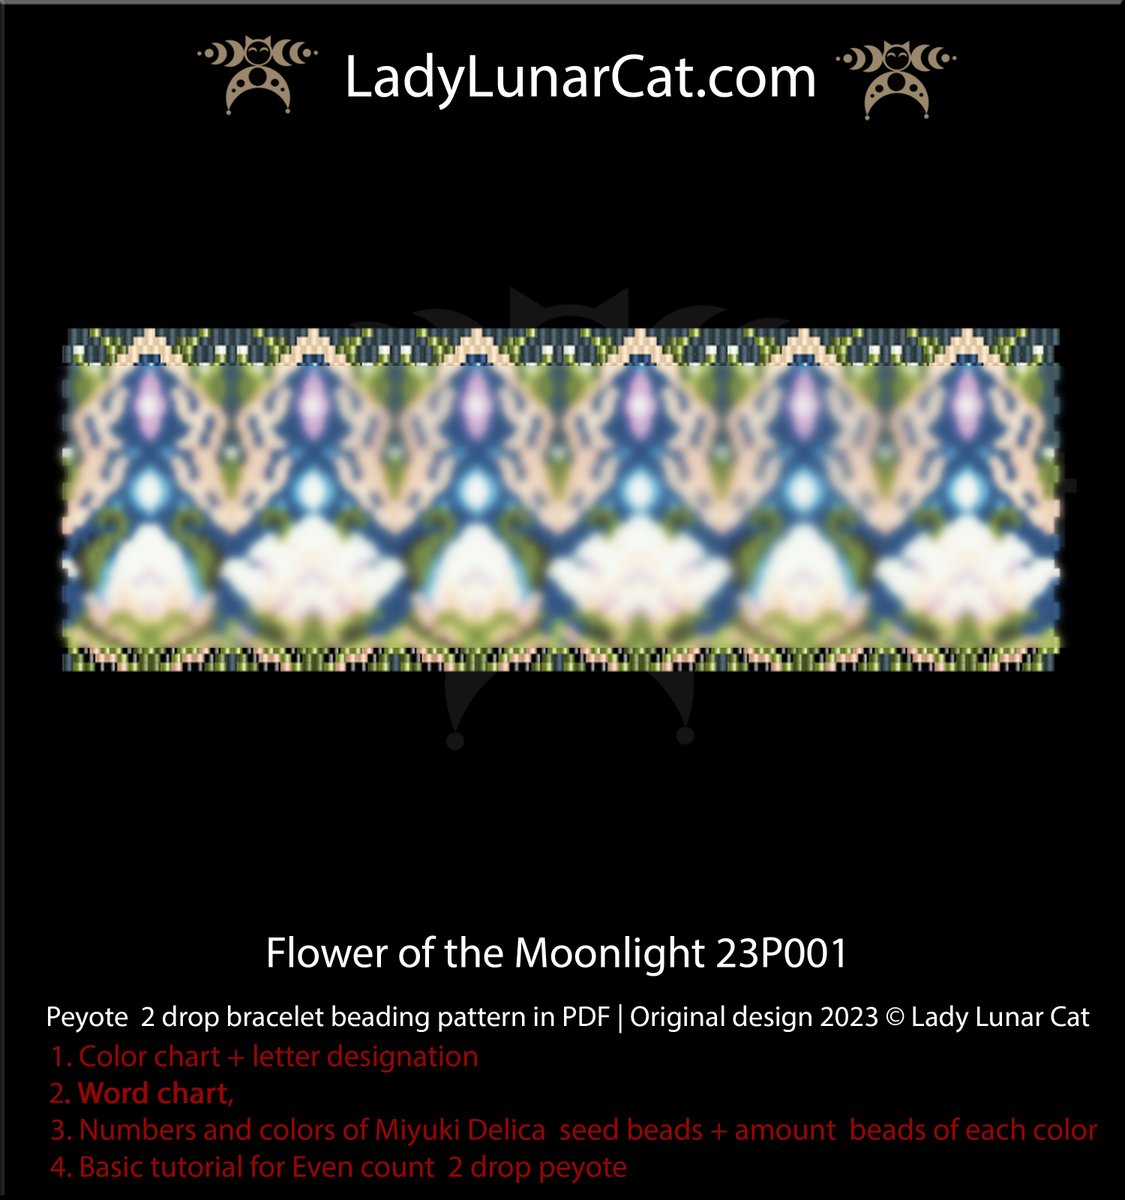 Peyote 2drop bracelet pattern for beading Flower of the Moonlight 23P001
#beadwork #beading #beadweaving #SeedBeads #peyote #Beaded #ビーズ編み #ビーズステッチ #비즈공예 #jewelrytrends   #bracelet  #ビーズ #BeadingTutorials #SpringFestival 
🌙🐾🐾🌷🌷🌷🌿
ladylunarcat.com/products/peyot…